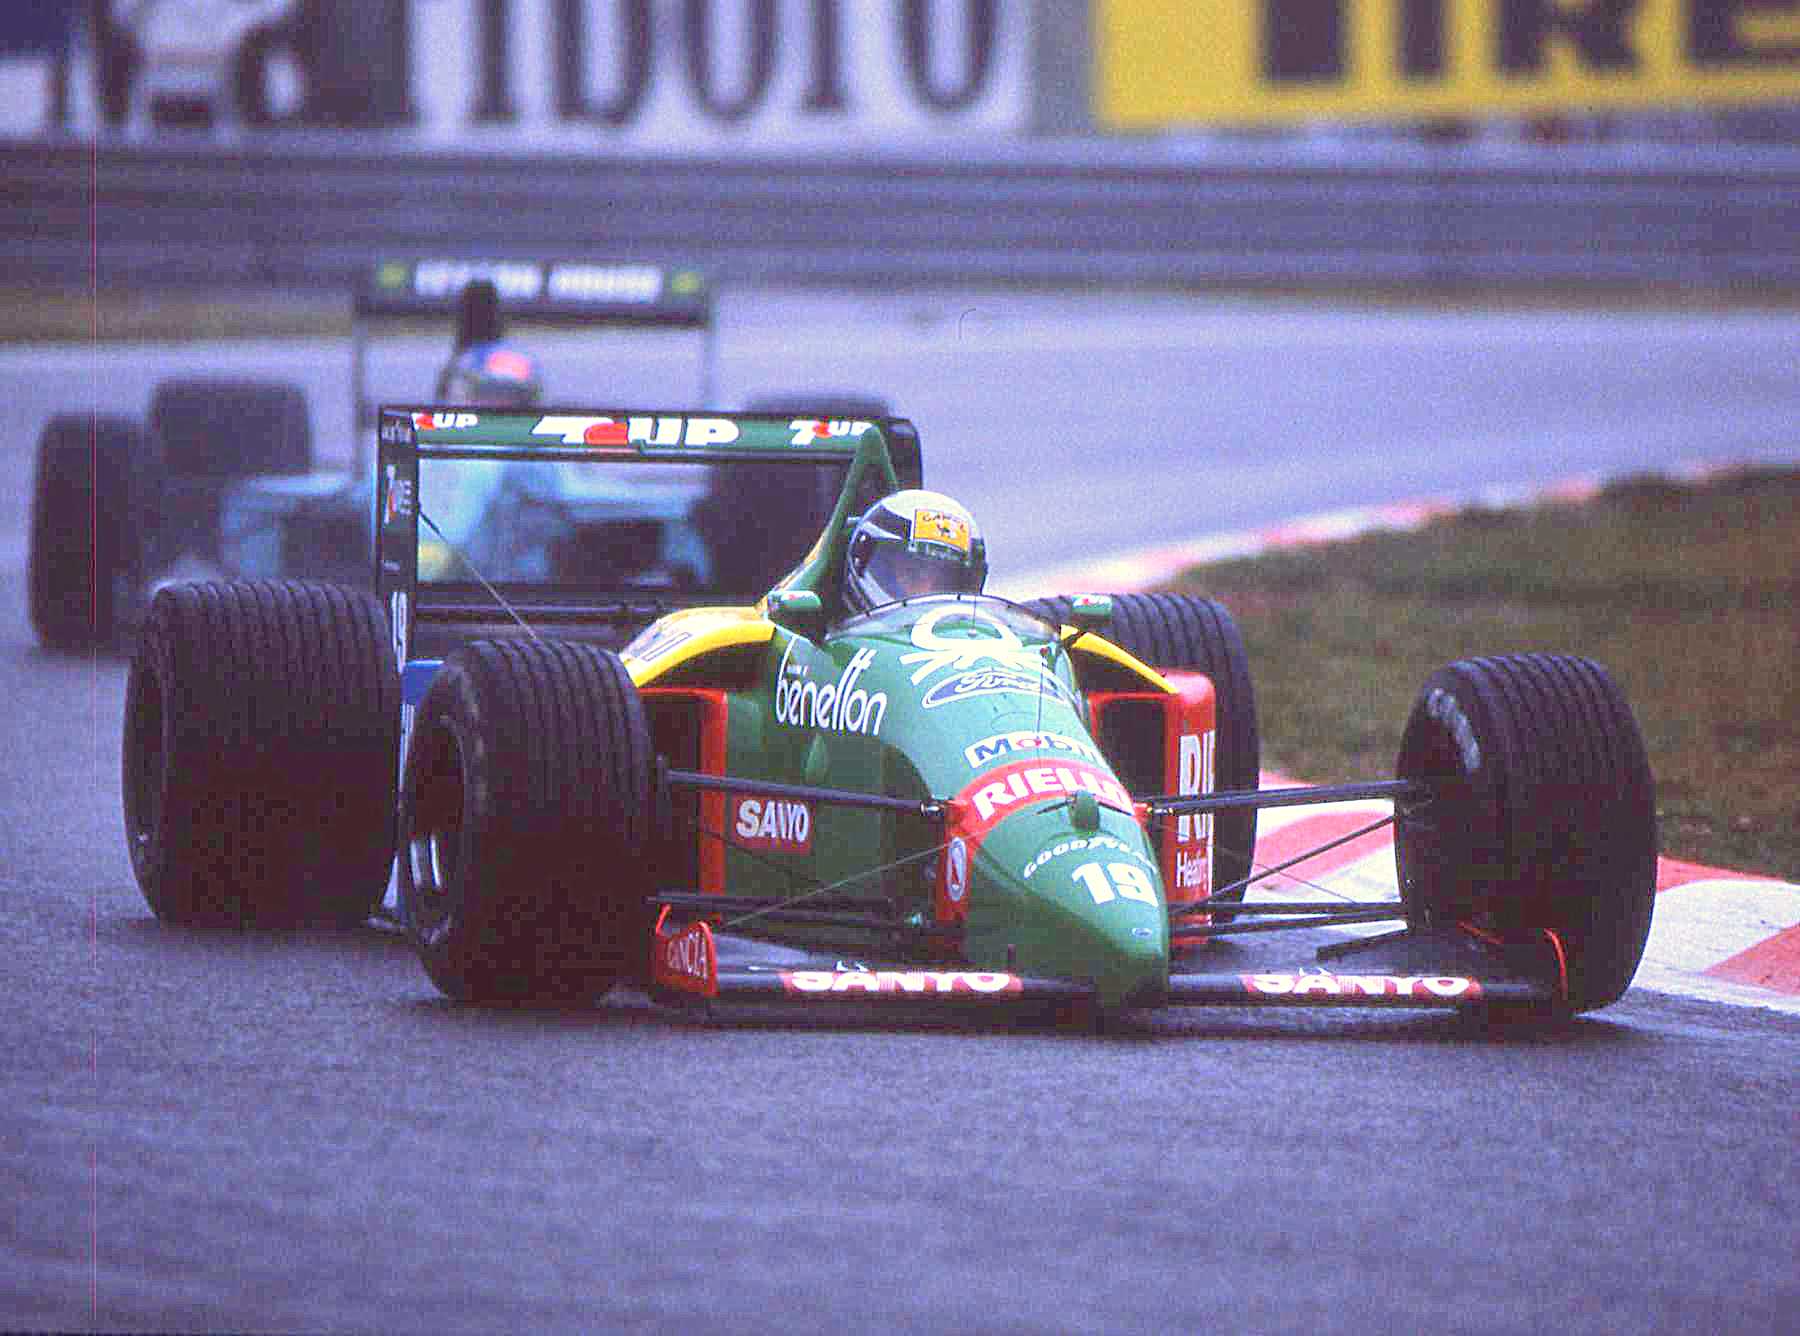 Benetton B189 - Wikipedia